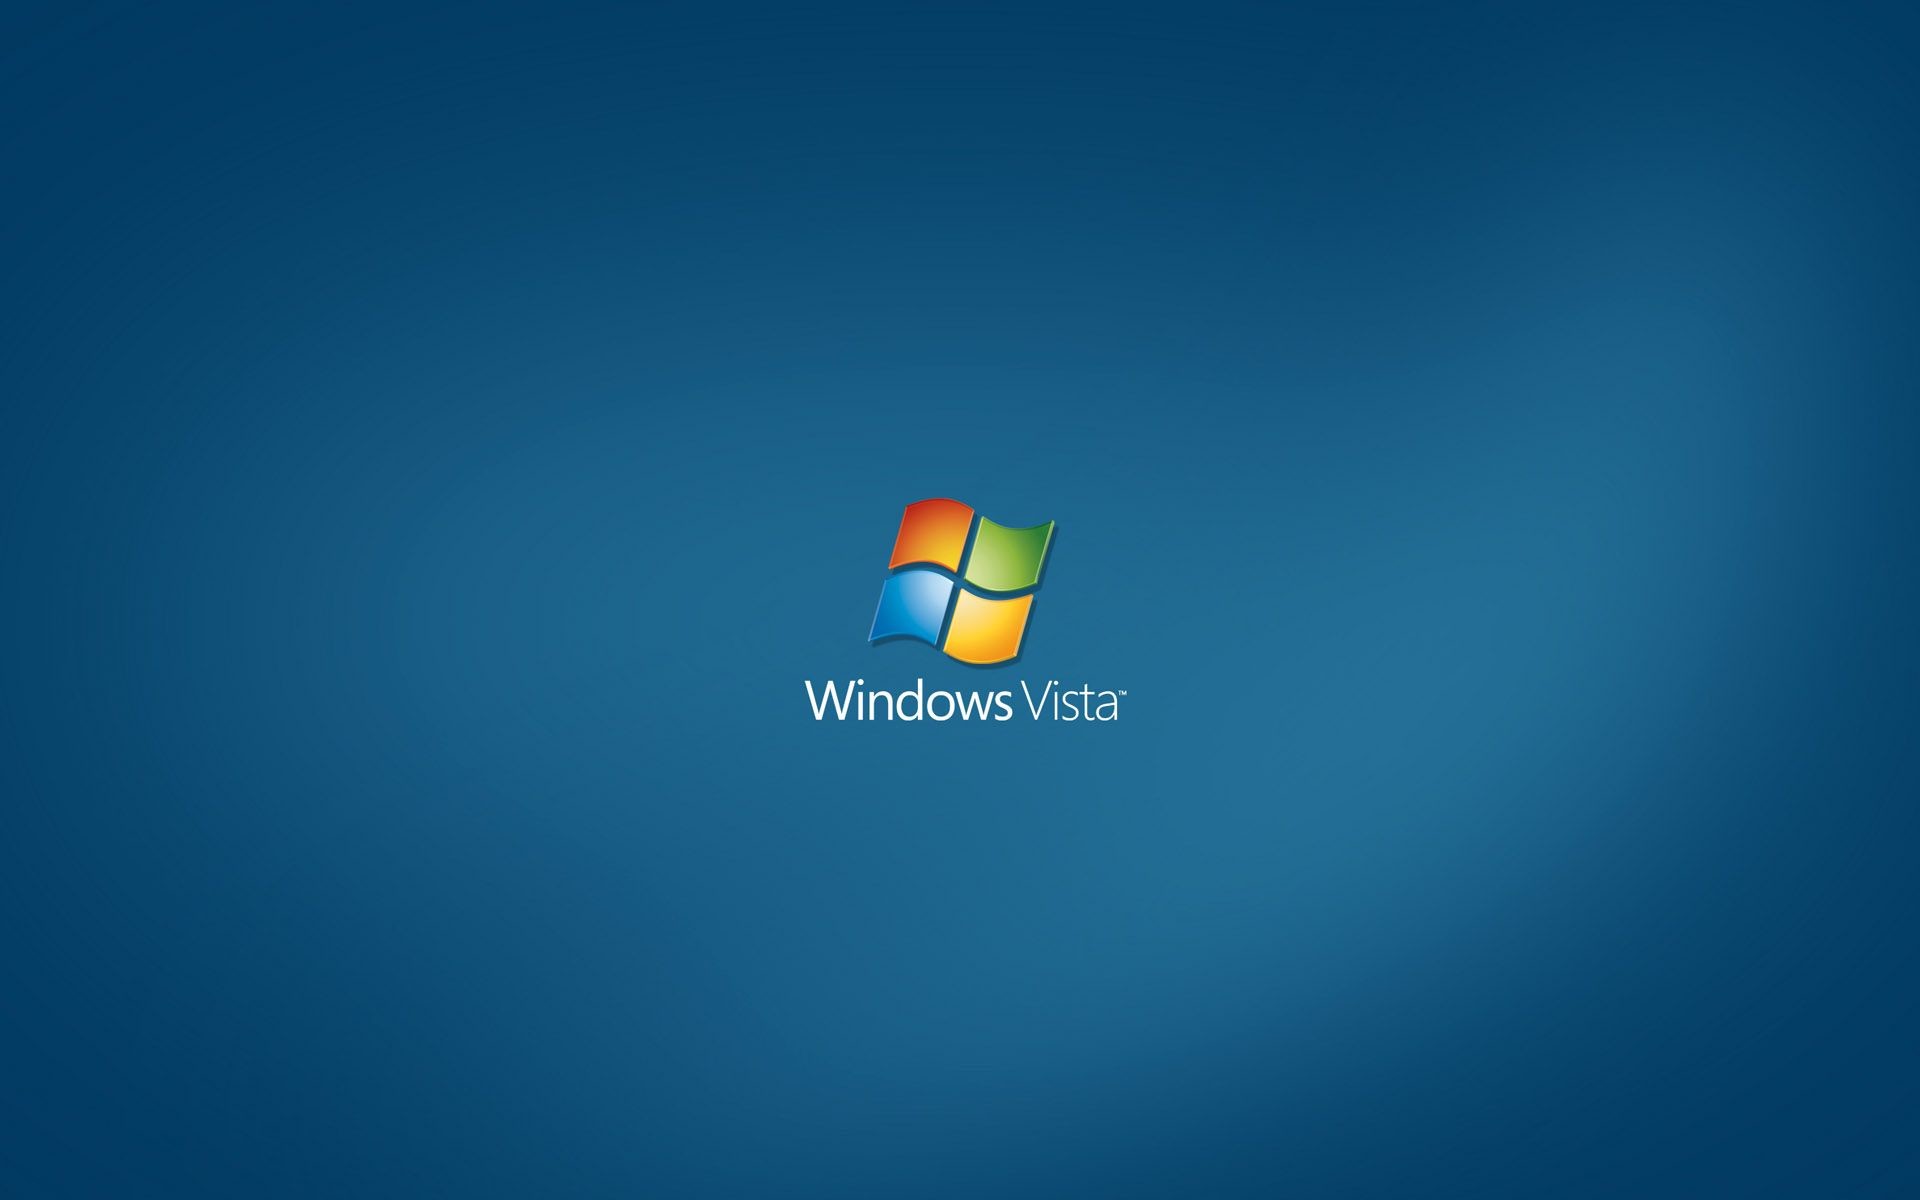 Windows Vista Wallpaper Hd Operating System 19x10 Wallpaper Teahub Io